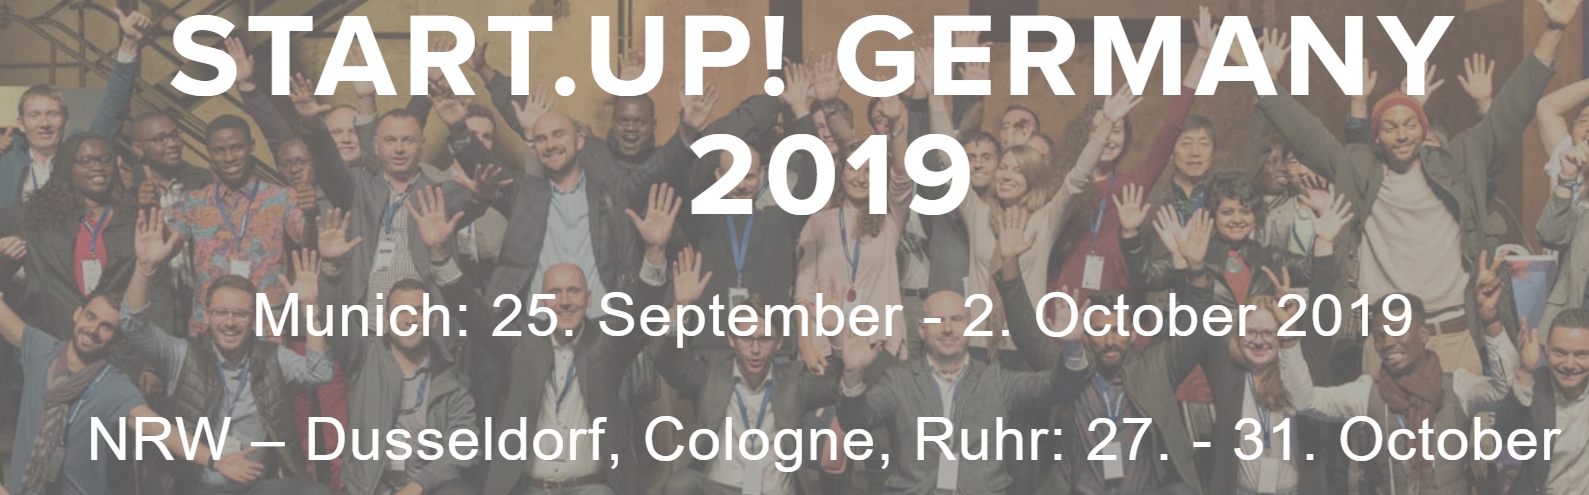 ViewApp – участник стартап тура «Start.up! Germany 2019»